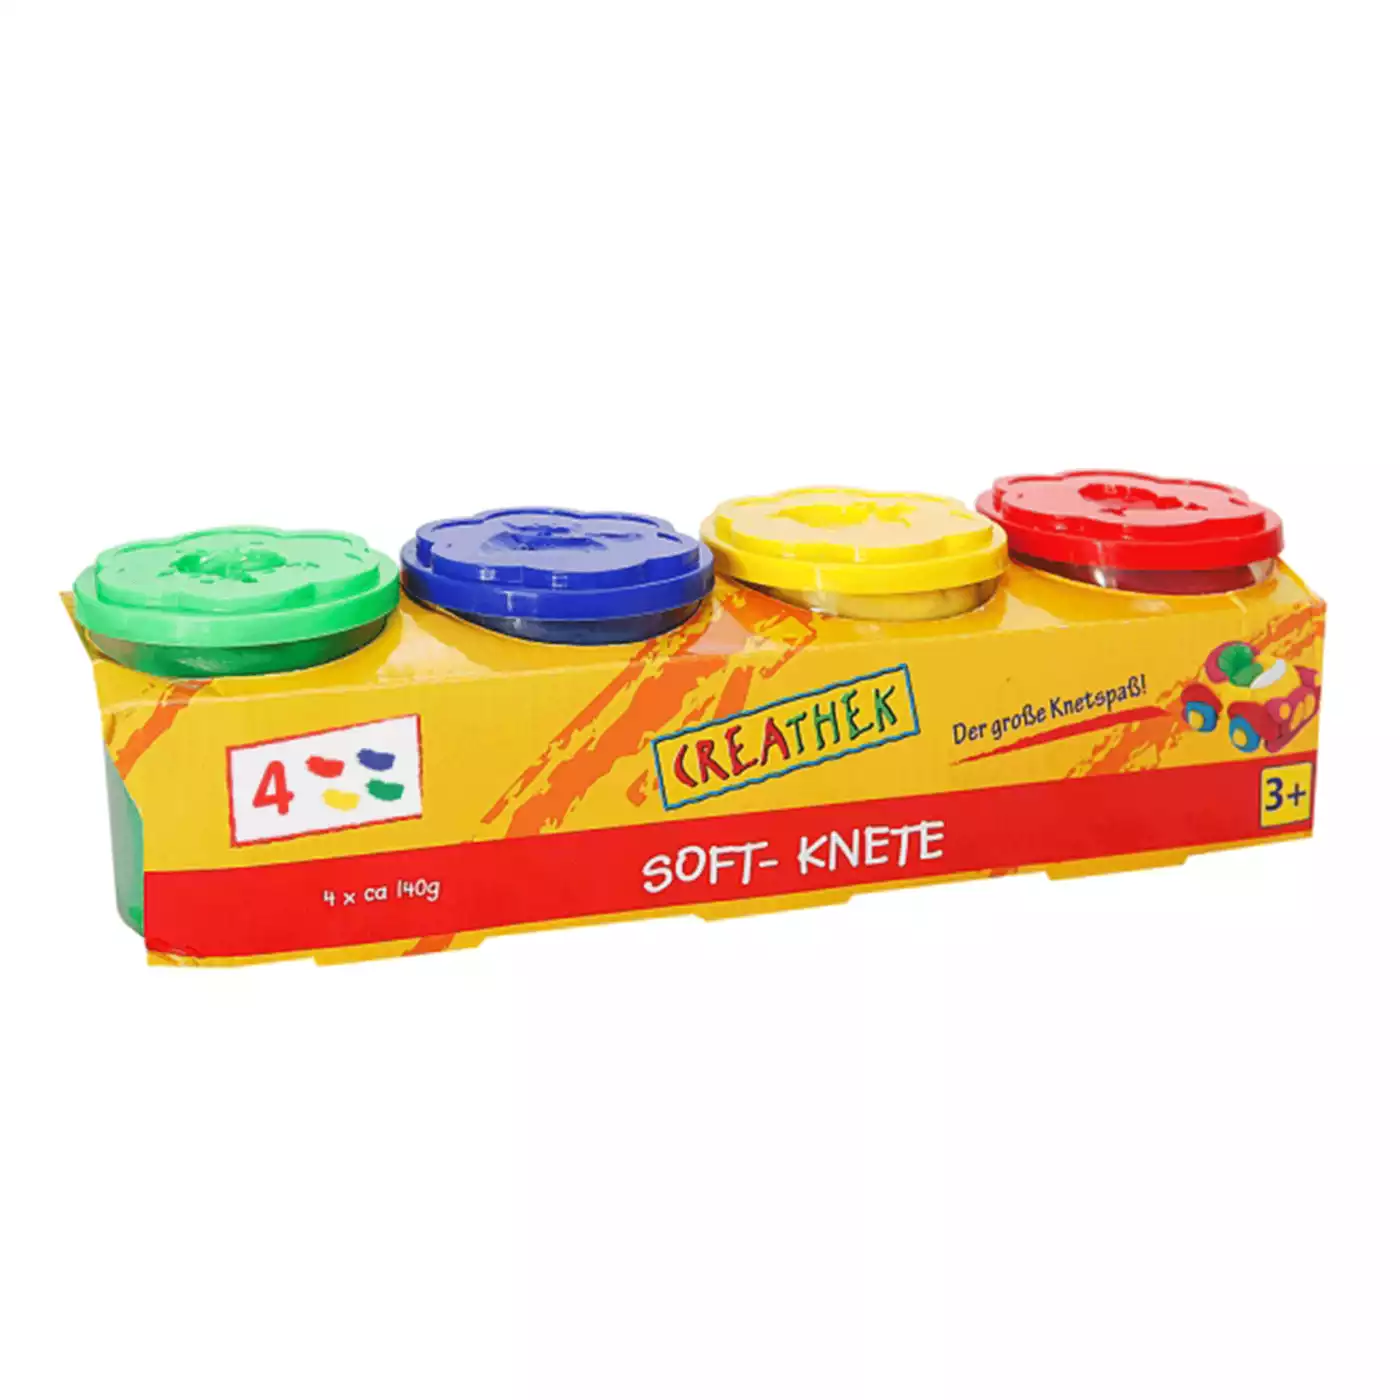 Creathek Soft-Knete Spielzeugring 2000570213907 1